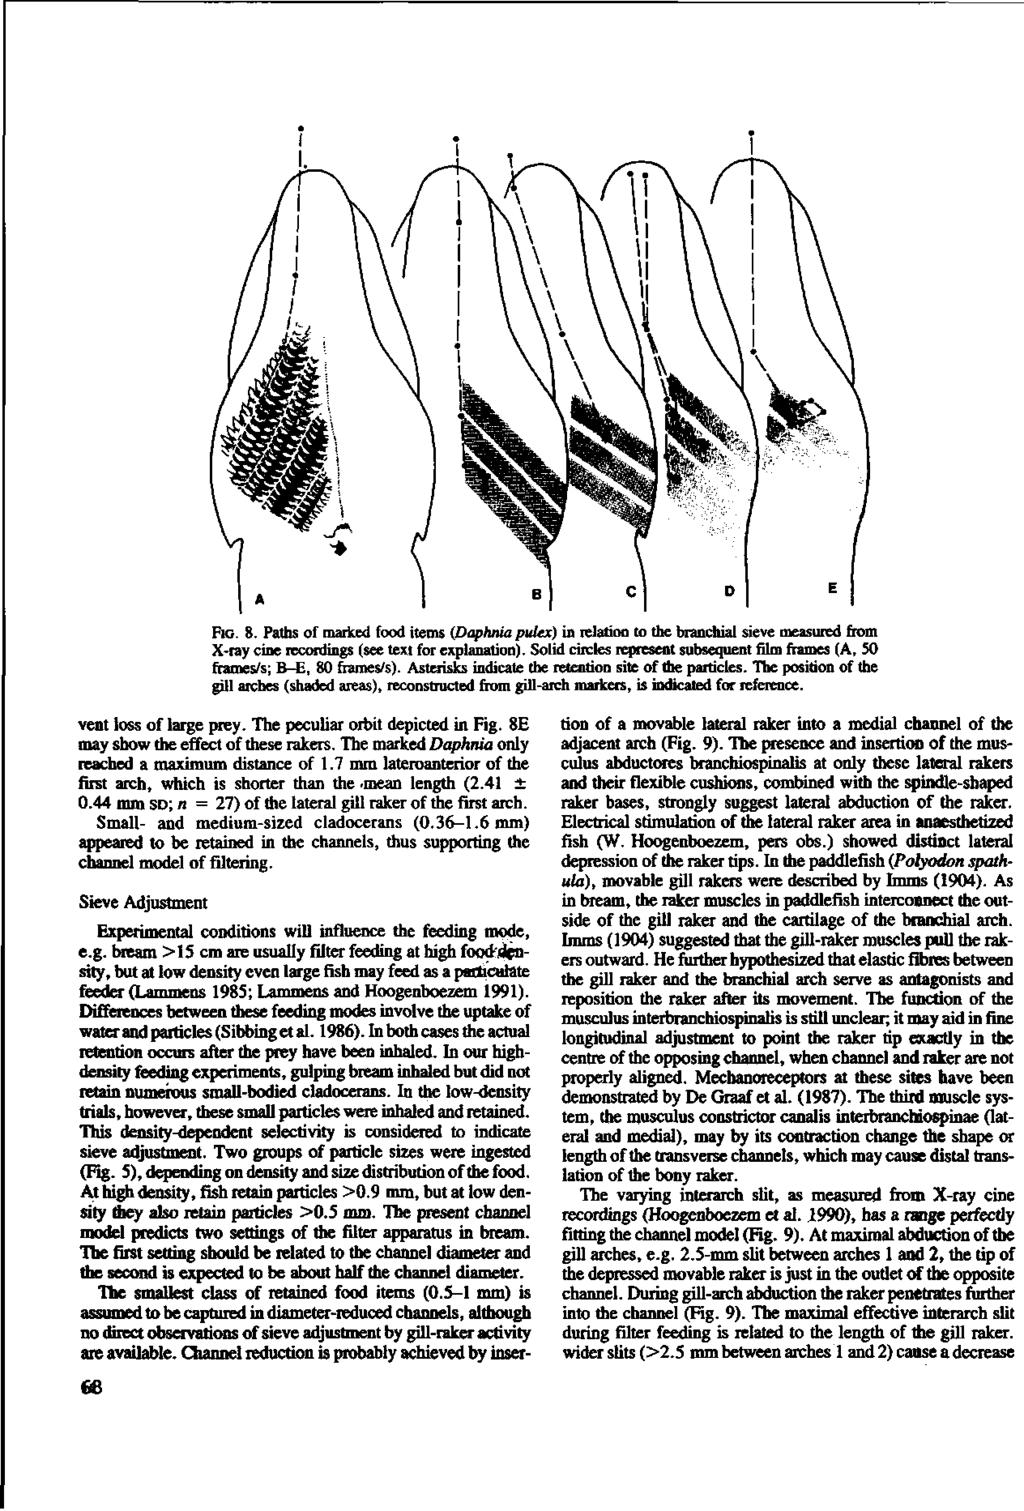 FIG. 8. Pathsof marked food items (Daphnia pulex) inrelation tothebranchial sievemeasured from X-raycine recordings (seetextforexplanation).